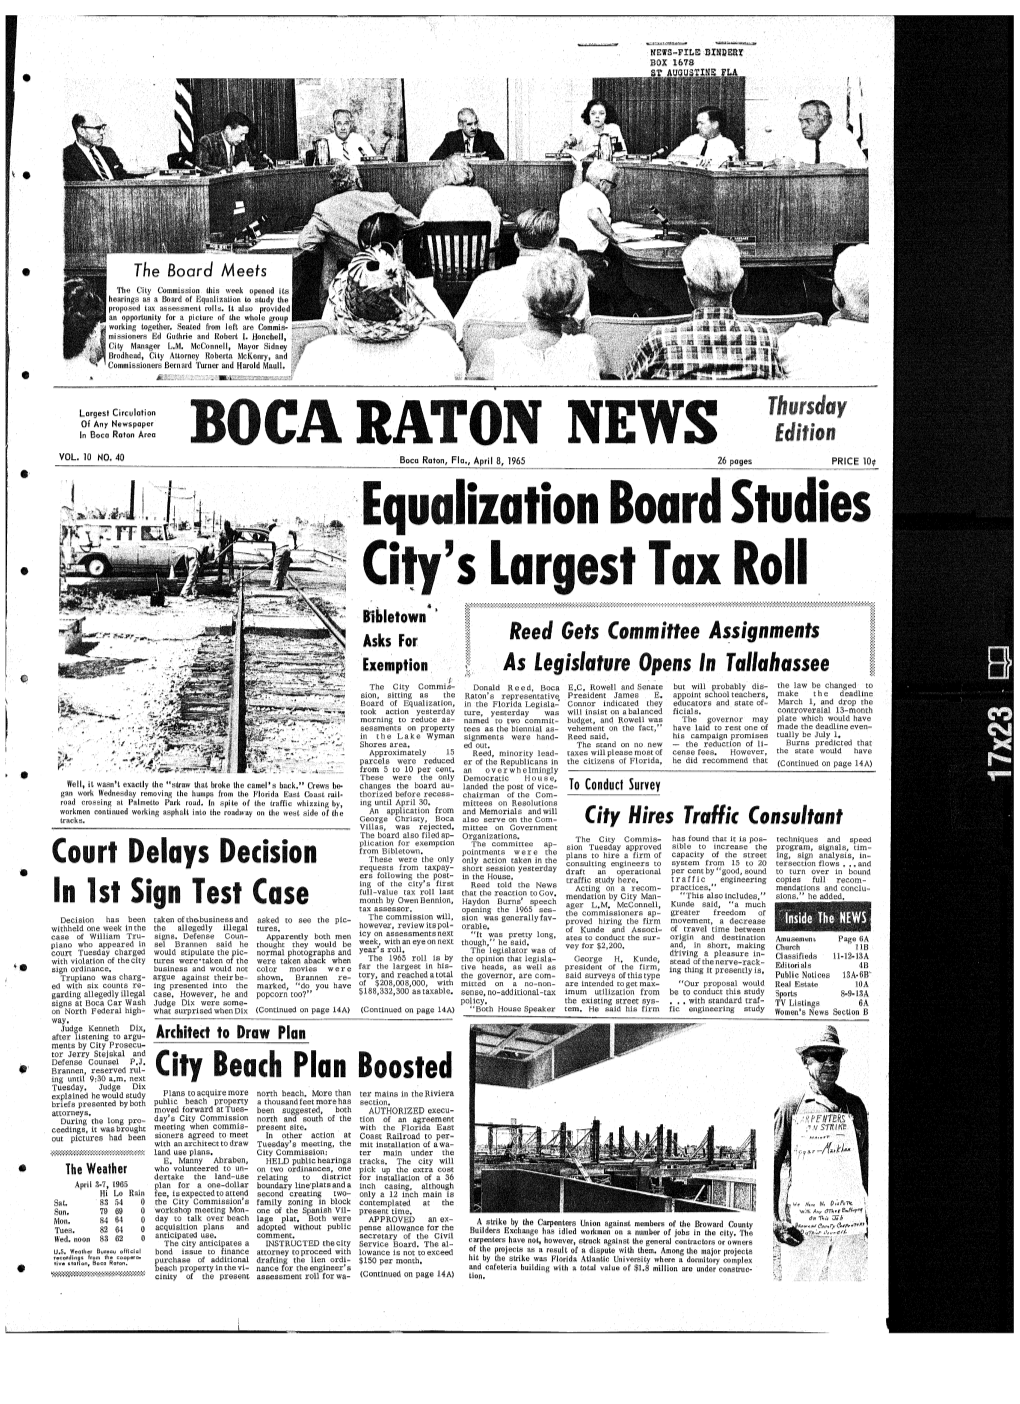 Boca Raton Area BOCA RATON NEWS VOL